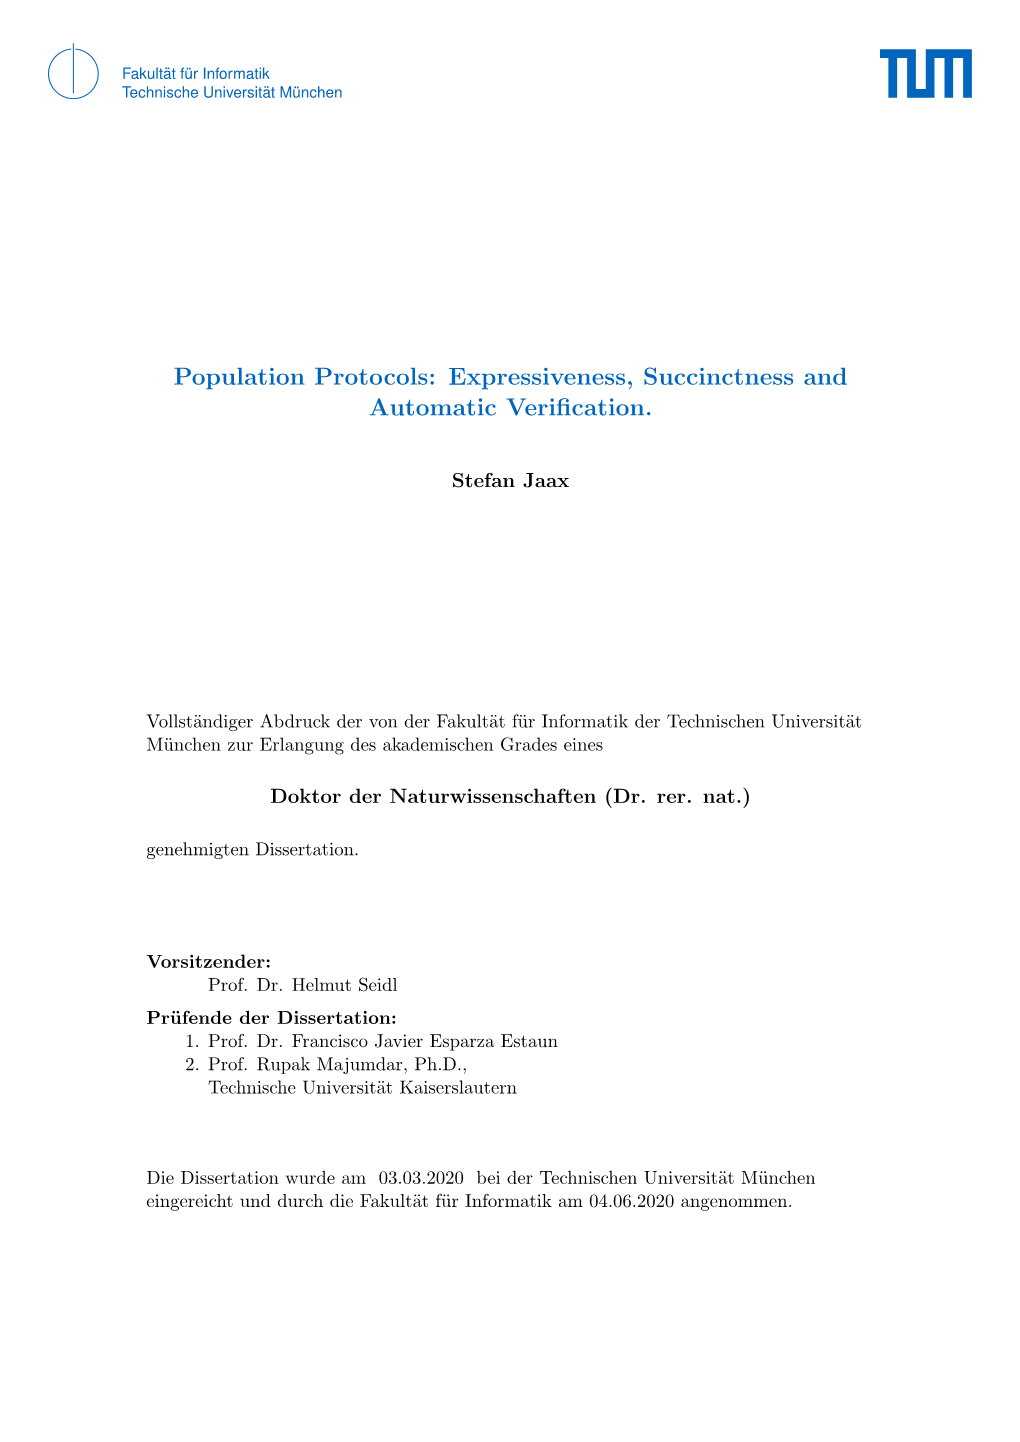 Population Protocols: Expressiveness, Succinctness and Automatic Veriﬁcation